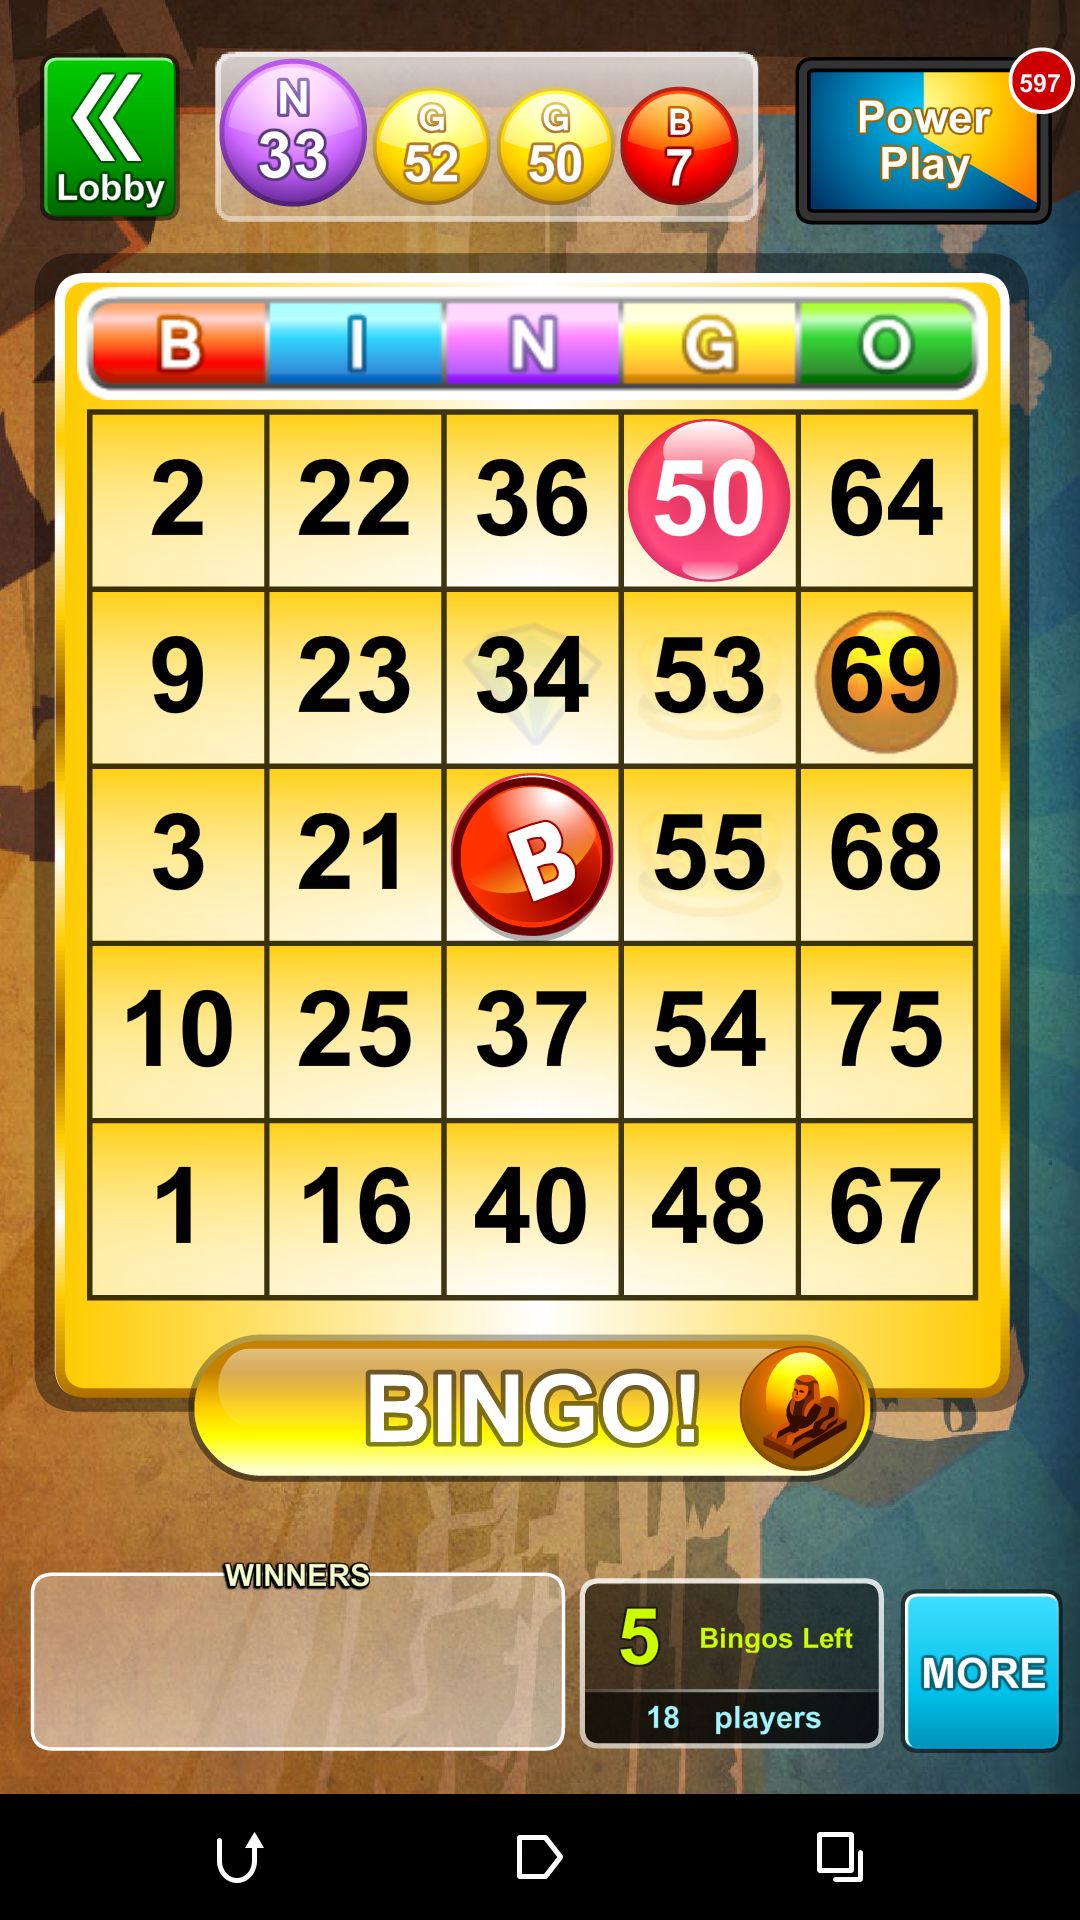 bingo bash free coins